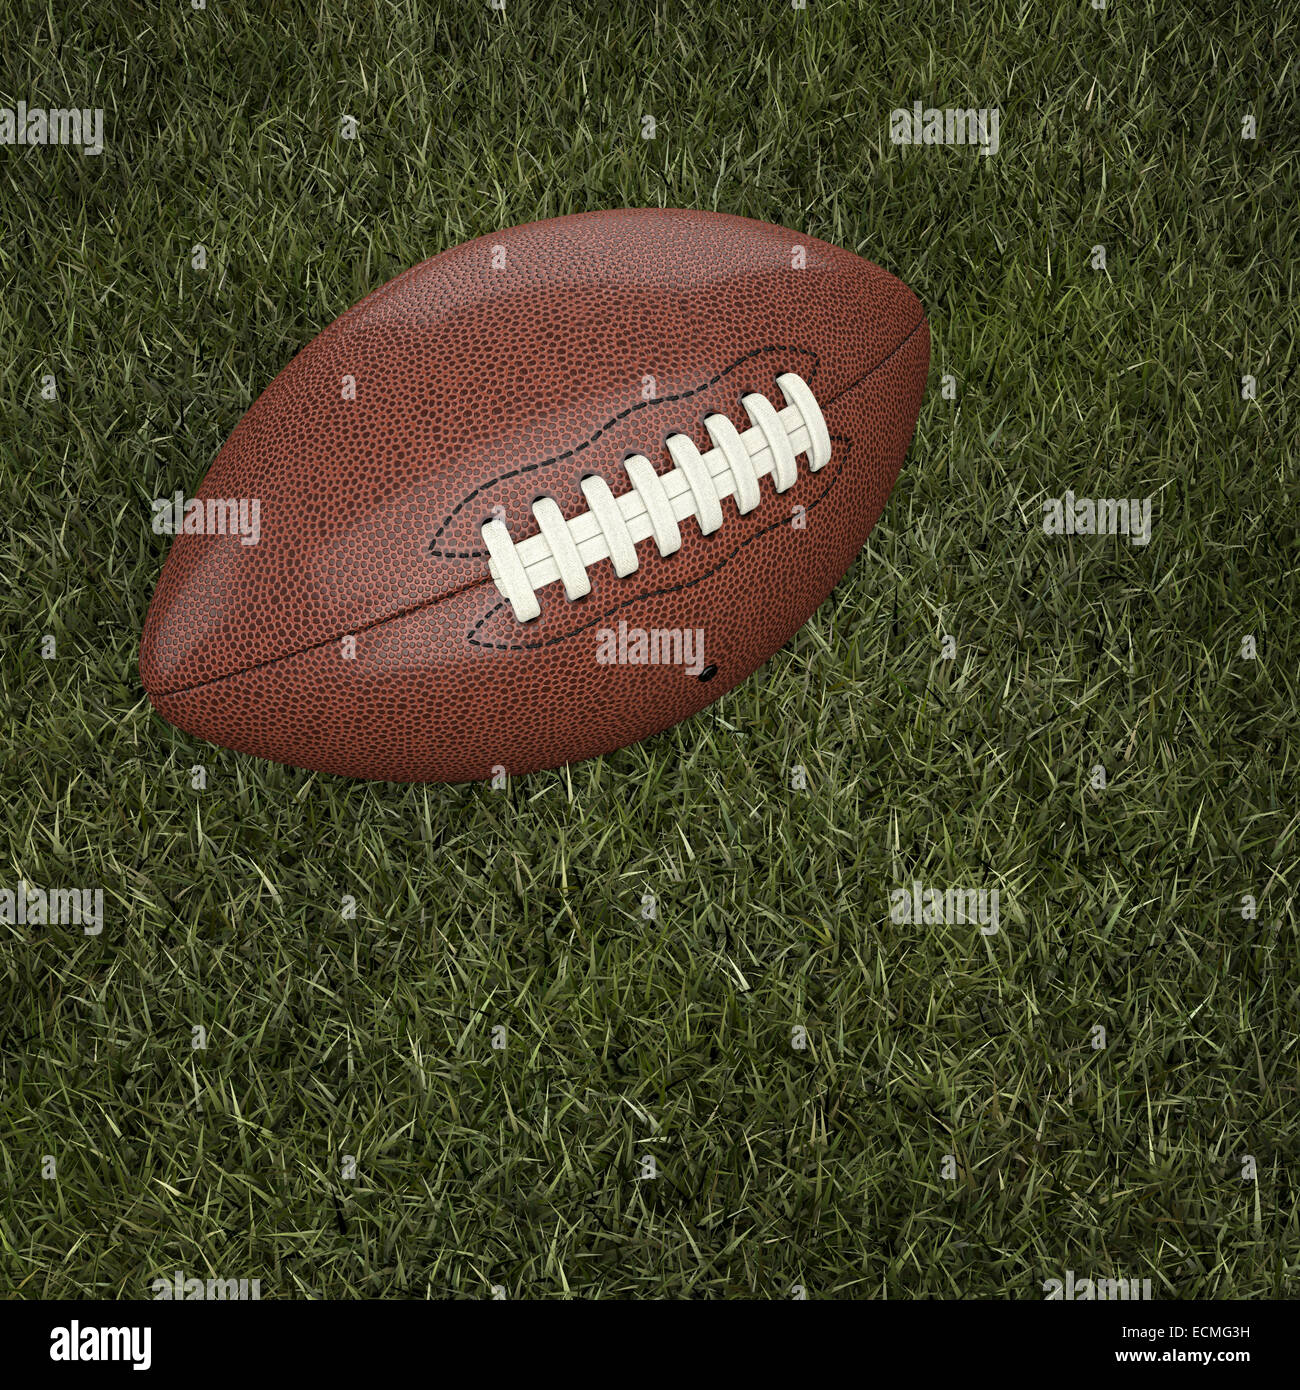 american football ball on grass Stock Photo